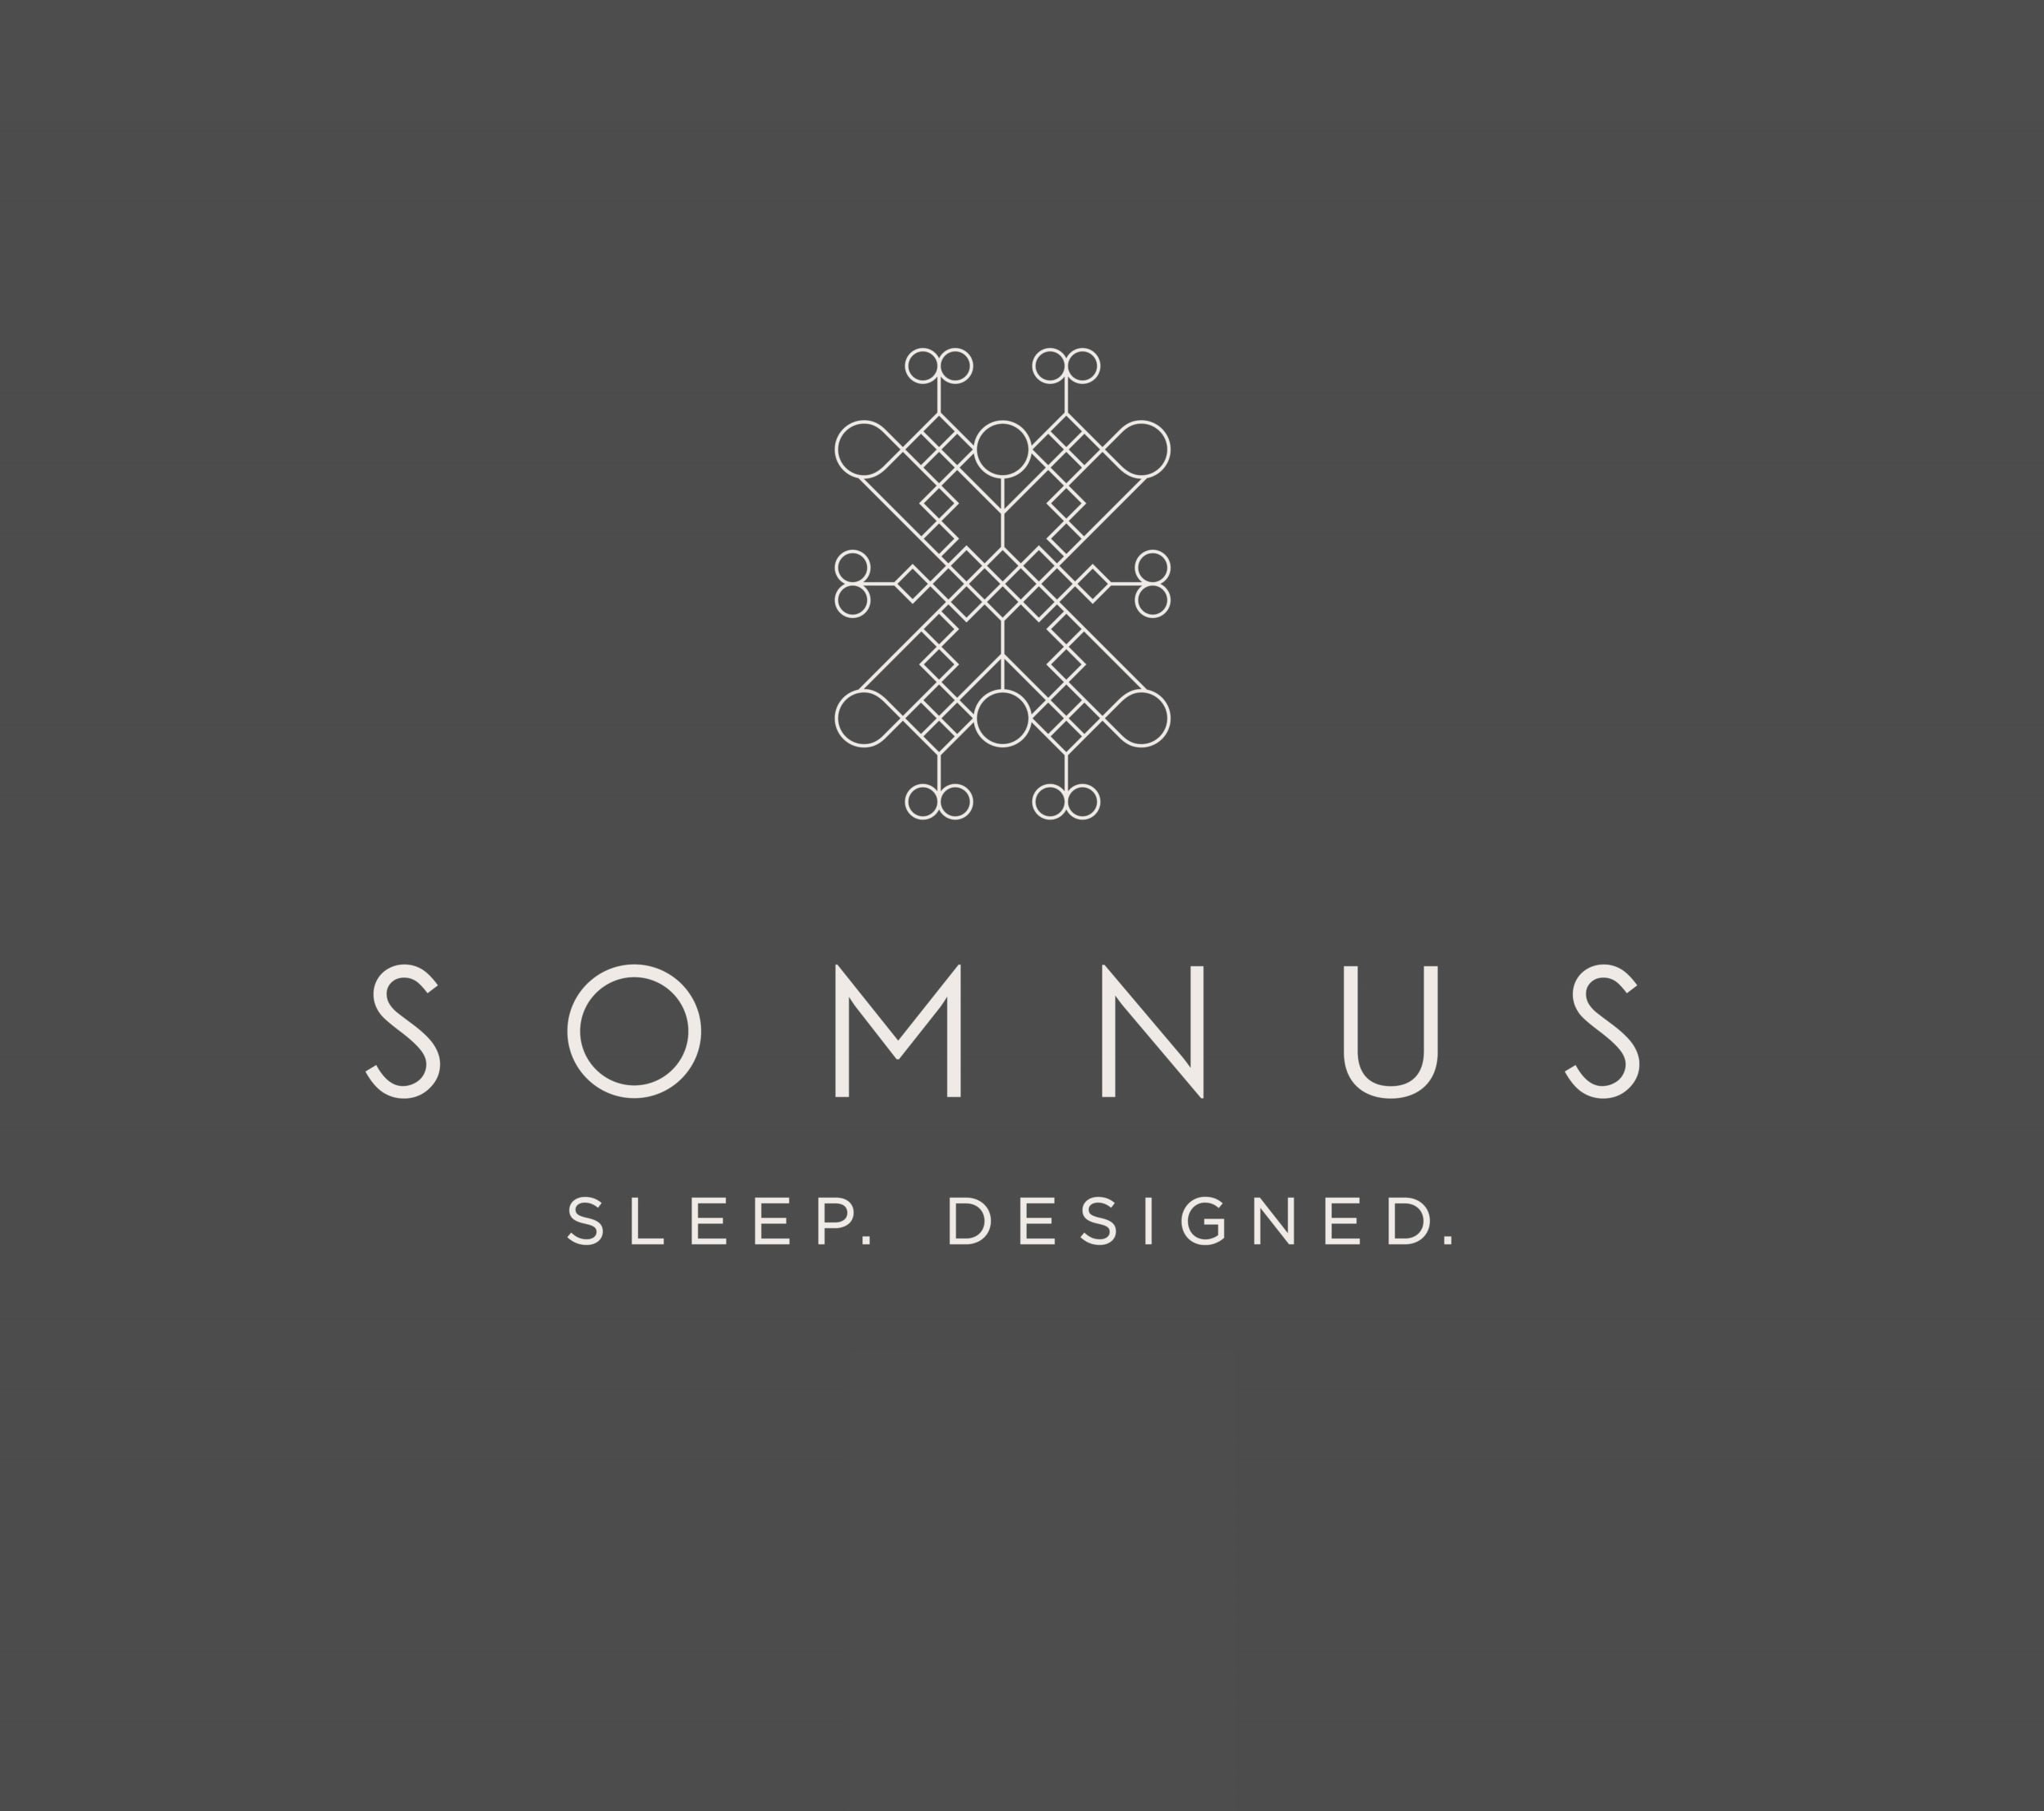 Somnus Ltd